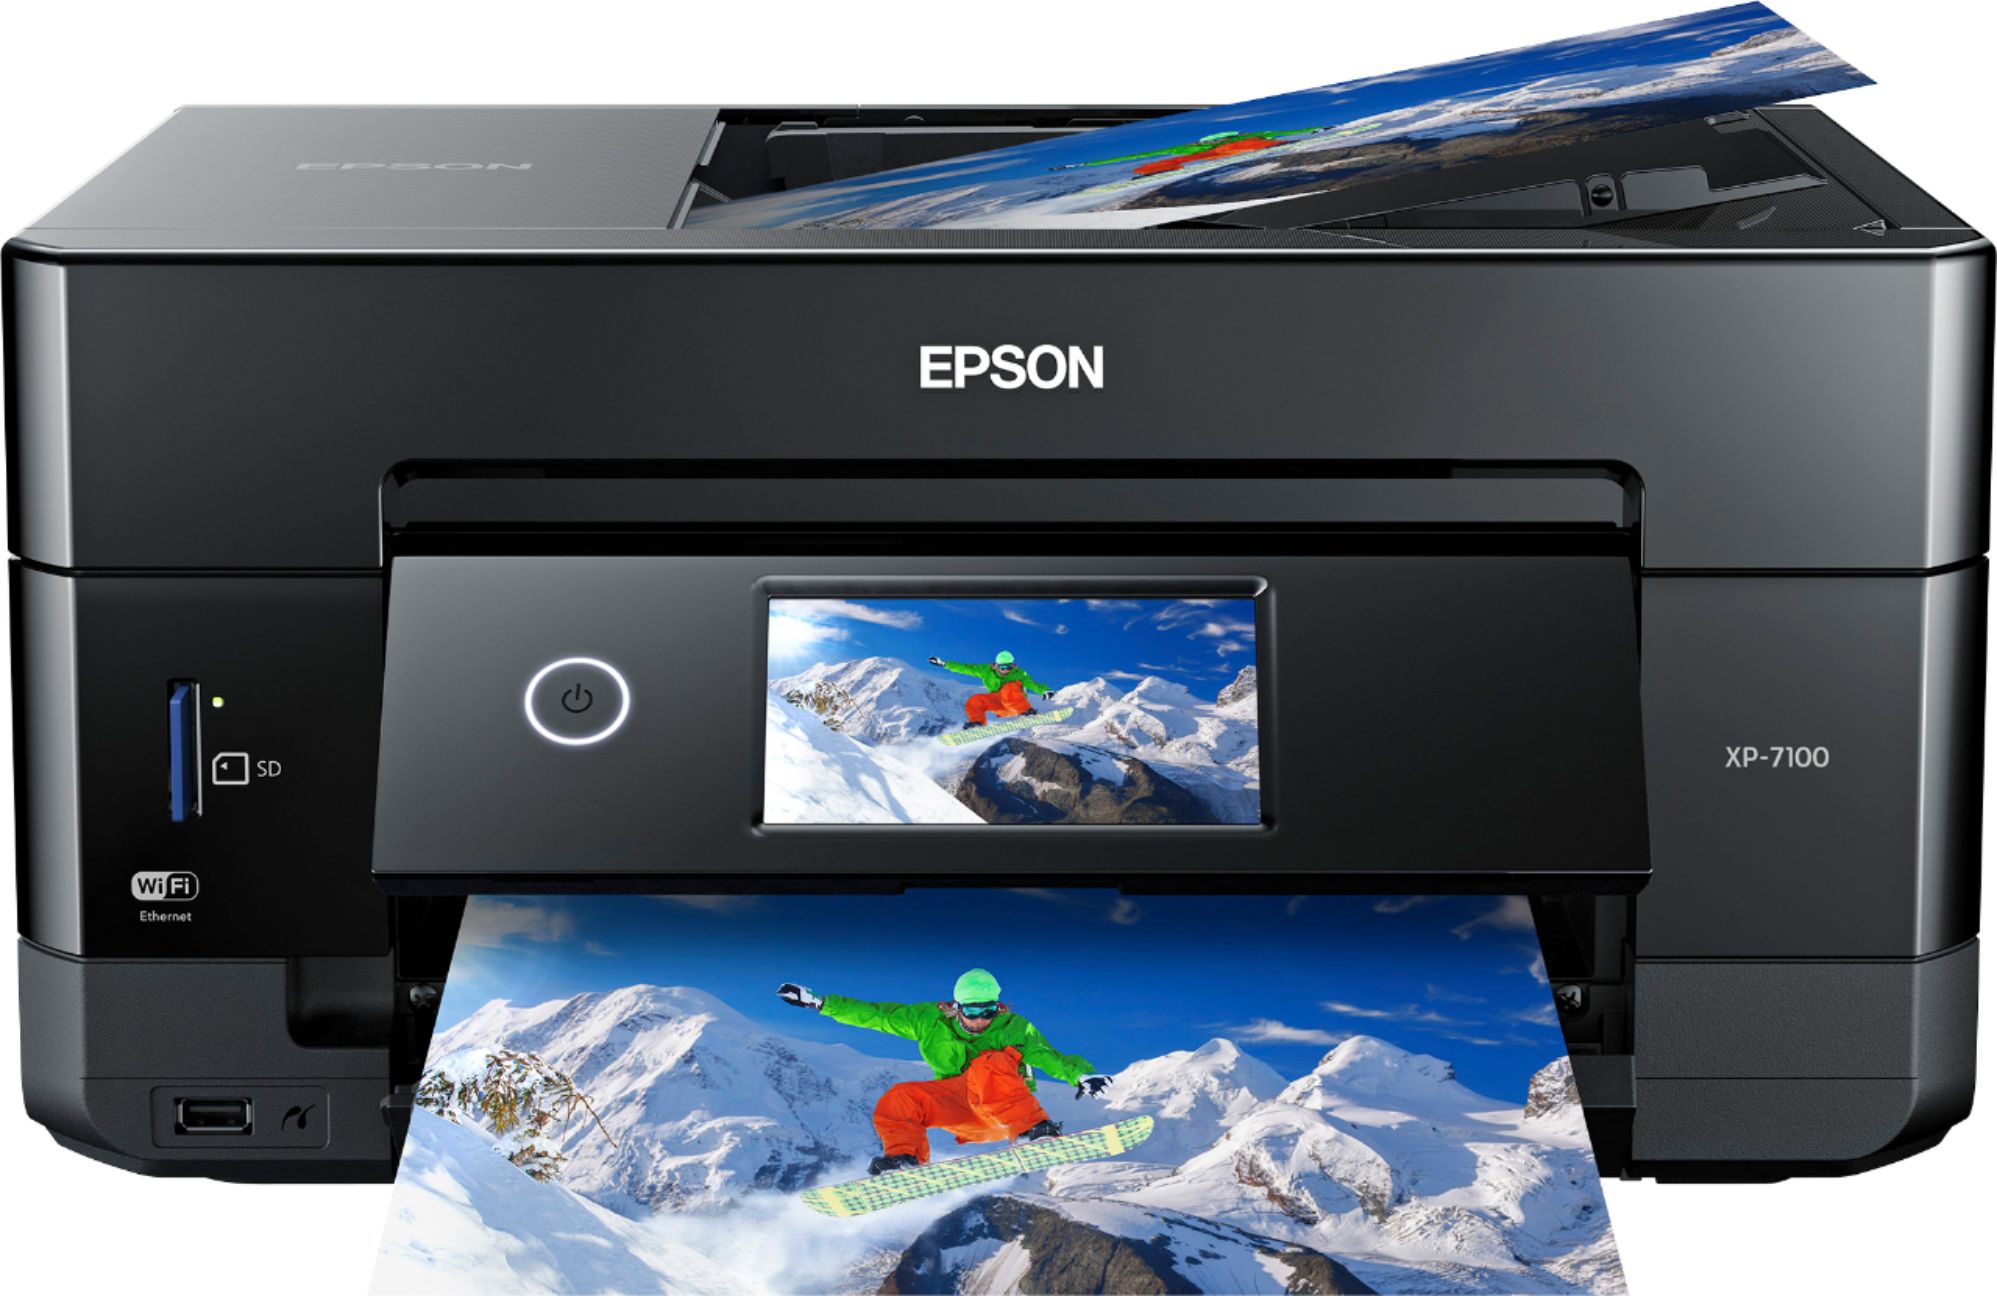 Epson, Epson XP-2200 3-In-1 A4 Wireless Printer Bundle, Black